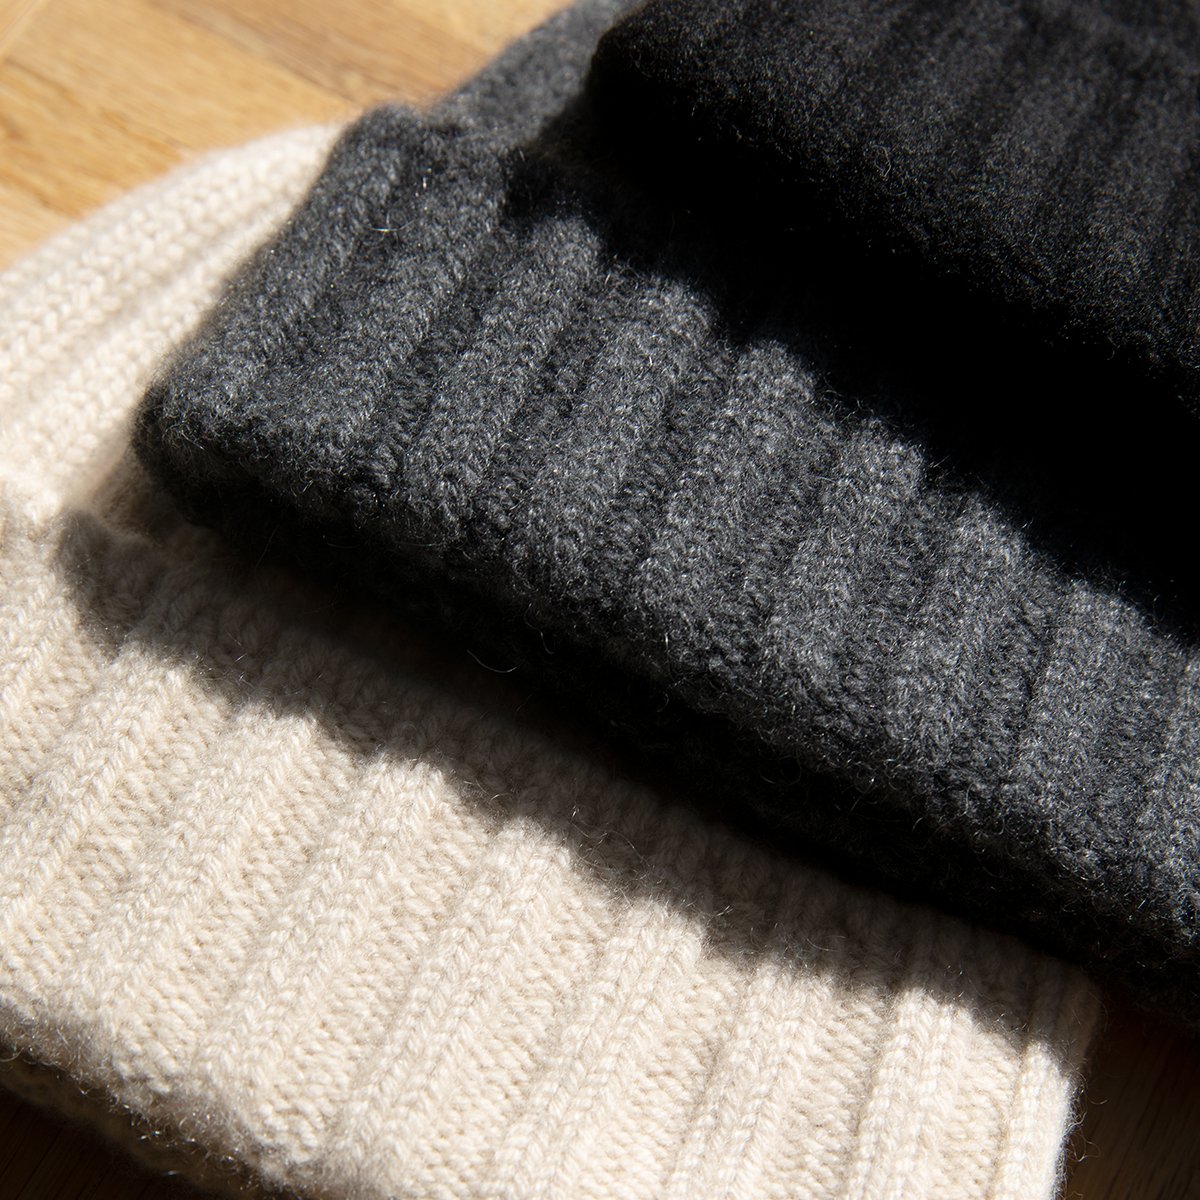 Knit Cap in Cashmere 2x2 Rib - Gray